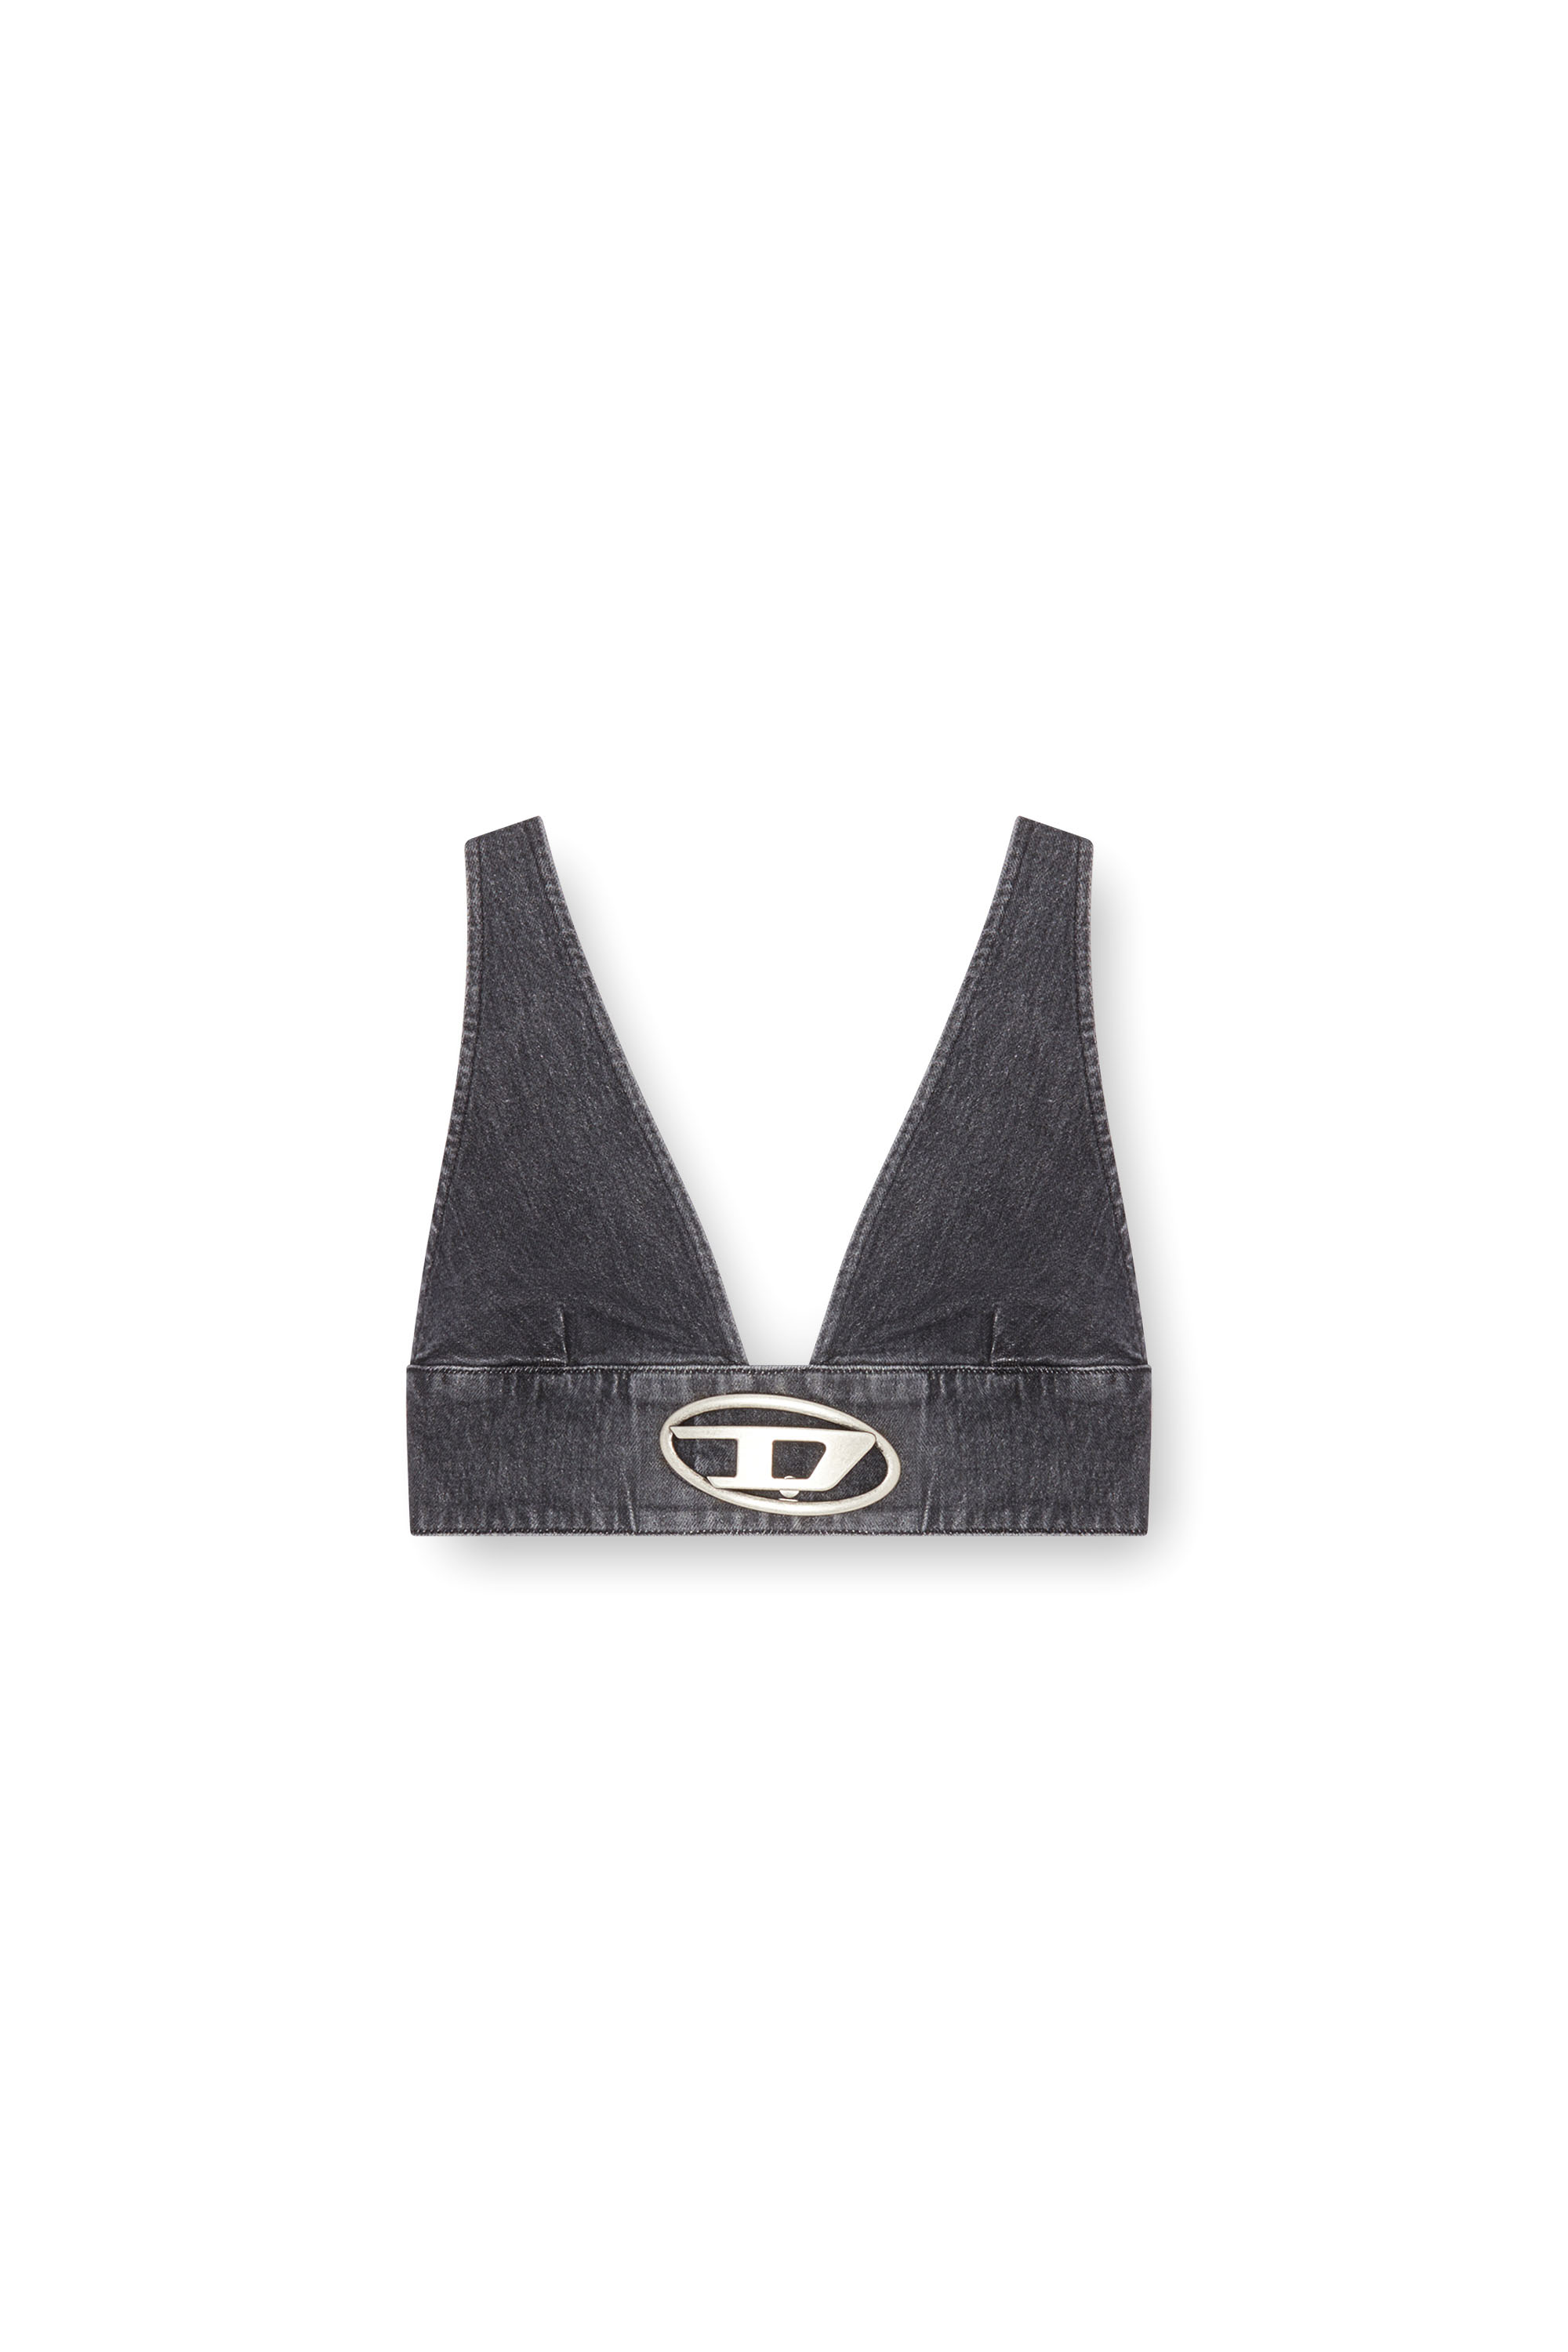 Diesel - DE-ELLY-S, Femme Brassière en denim avec plaque Oval D in Noir - Image 3